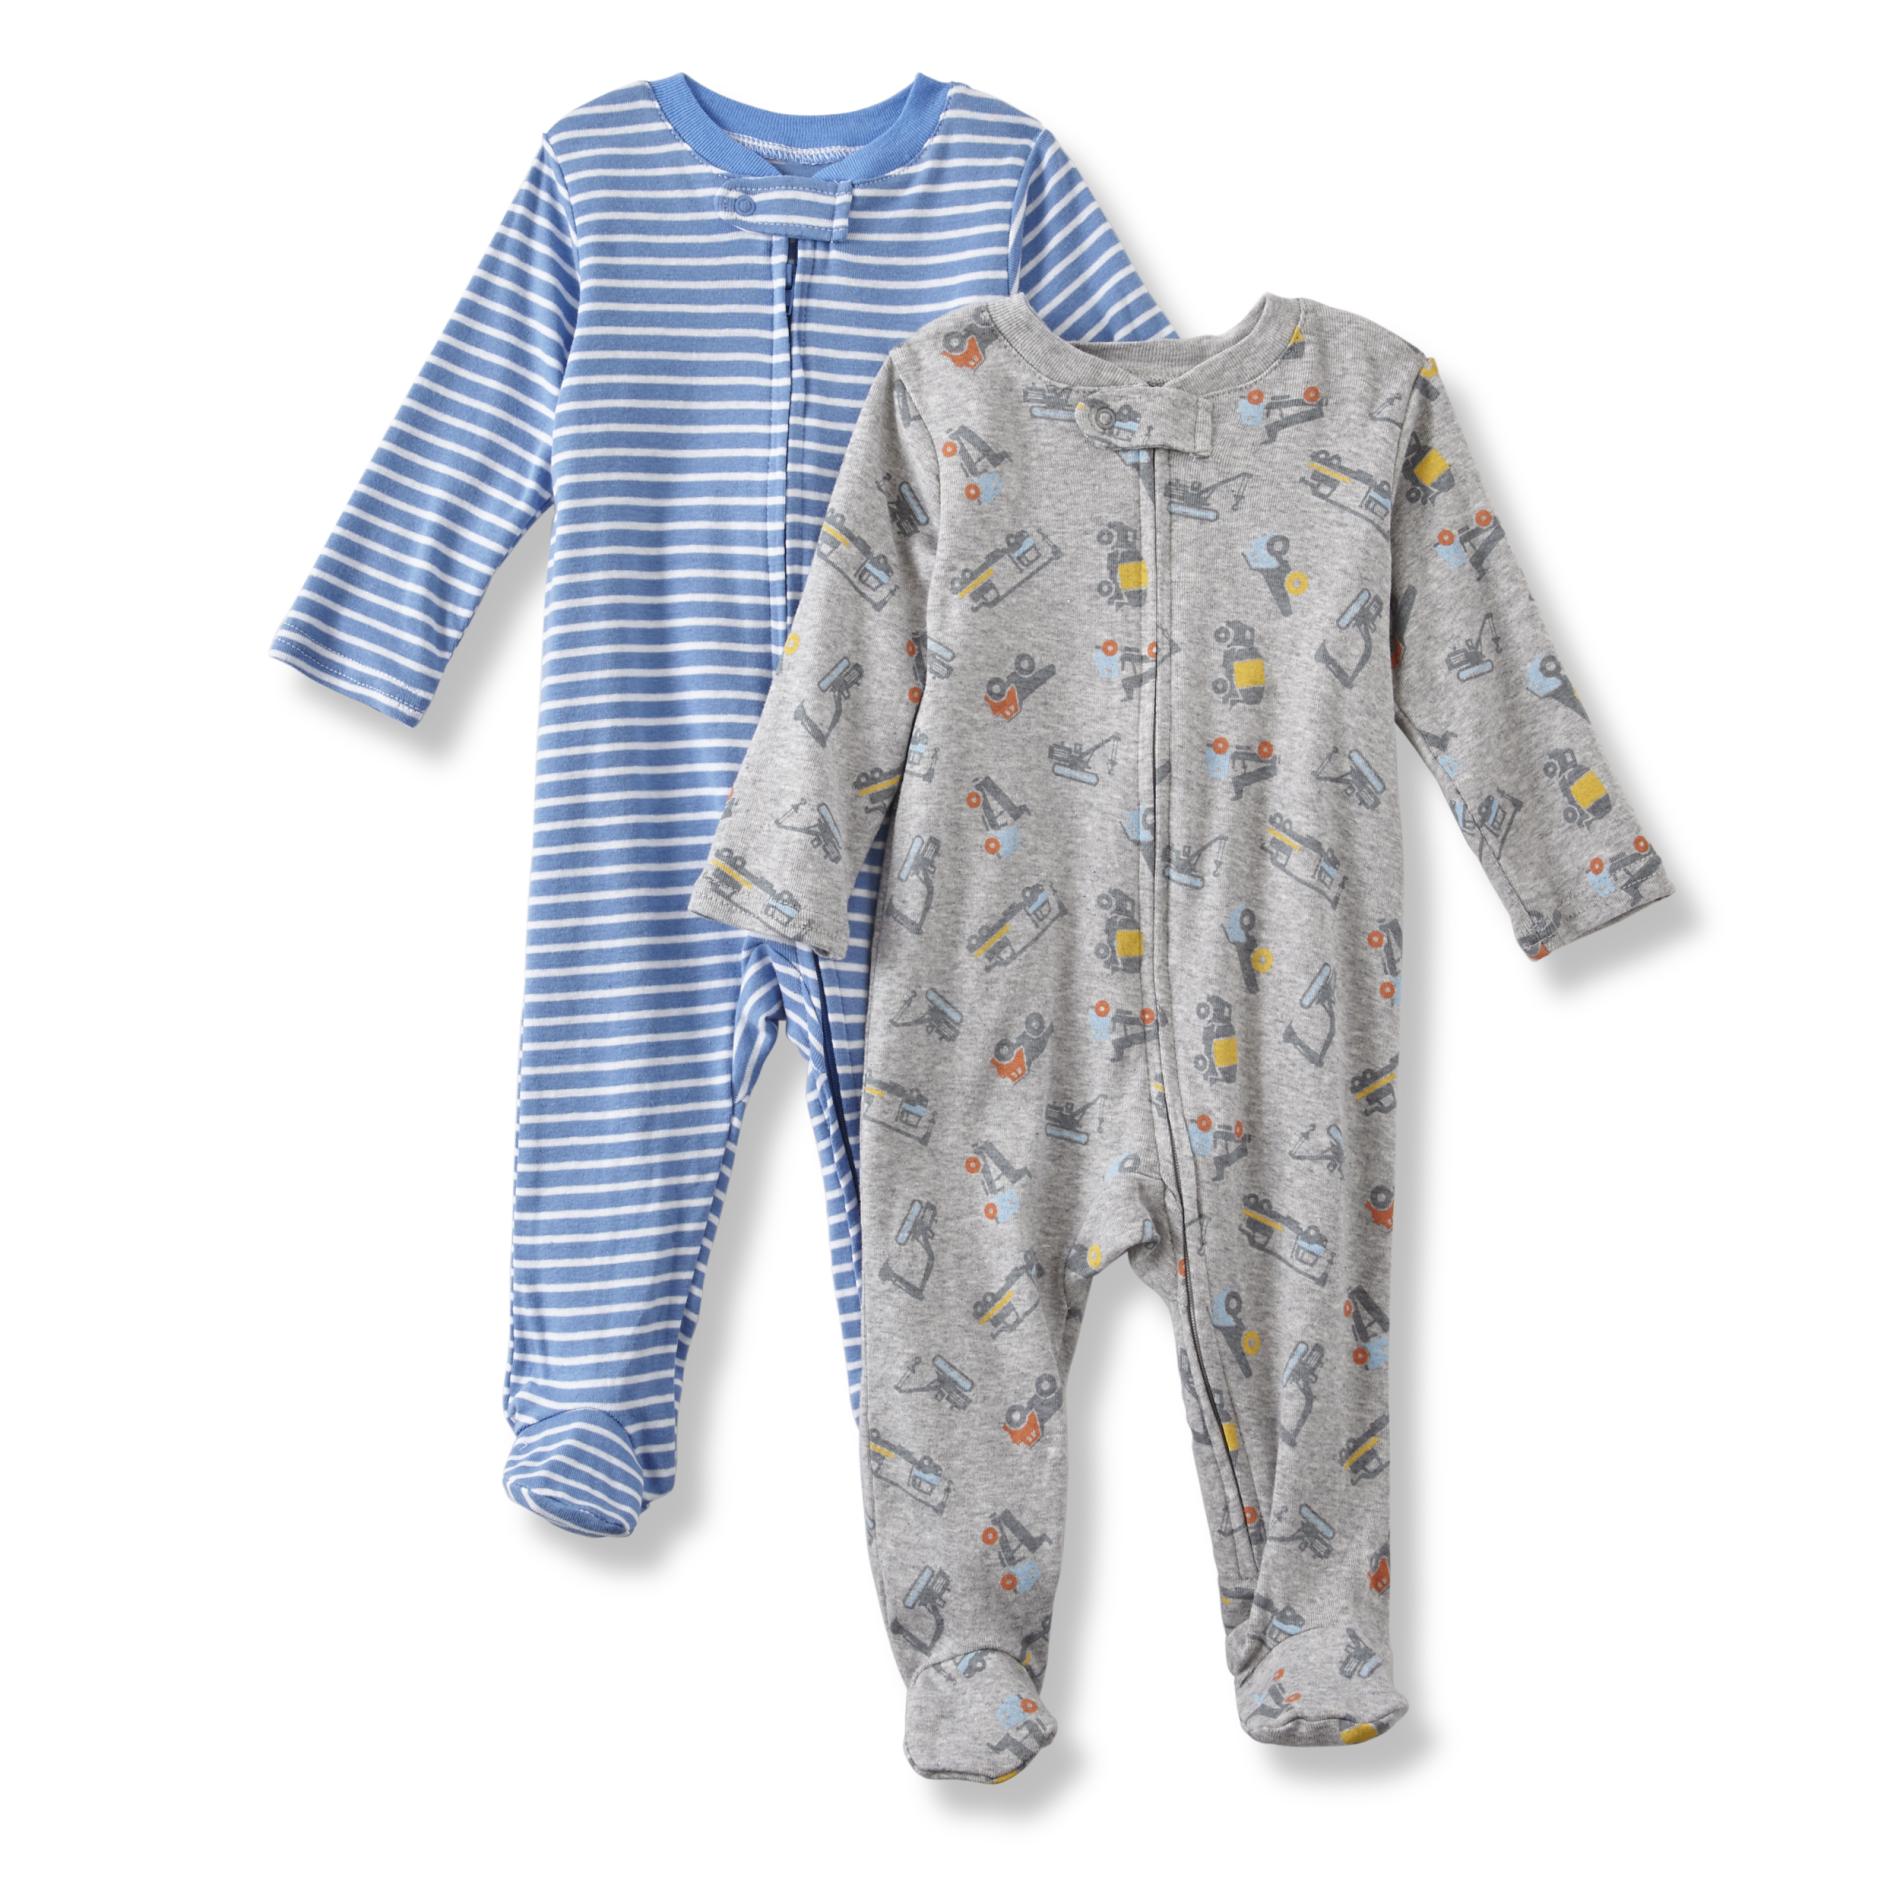 Little Wonders Infant Boys' 2-Pack Sleeper Pajamas - Striped & Trucks